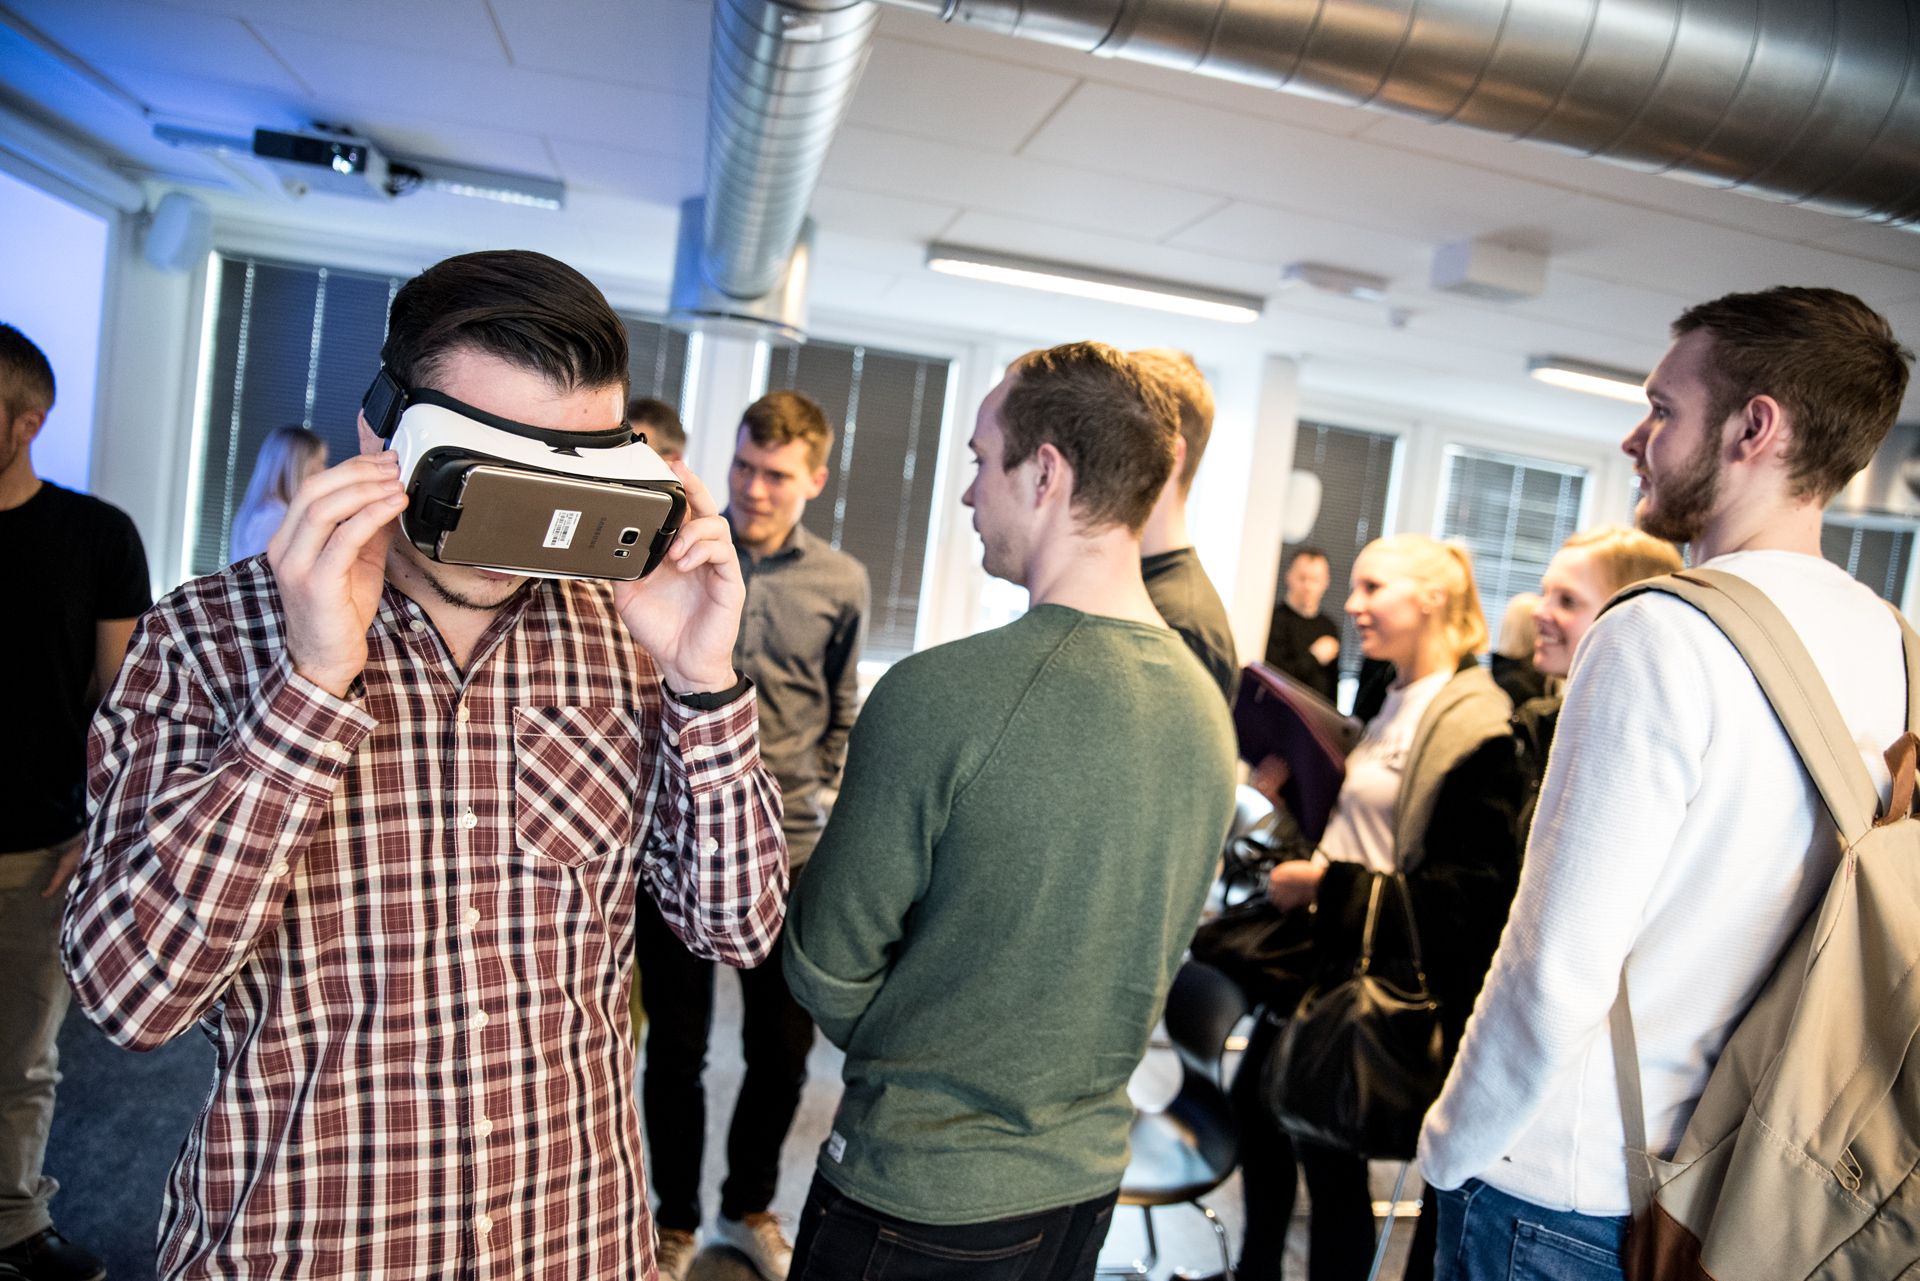 Flere studerende fra Cphbusiness står med virtual reality briller på